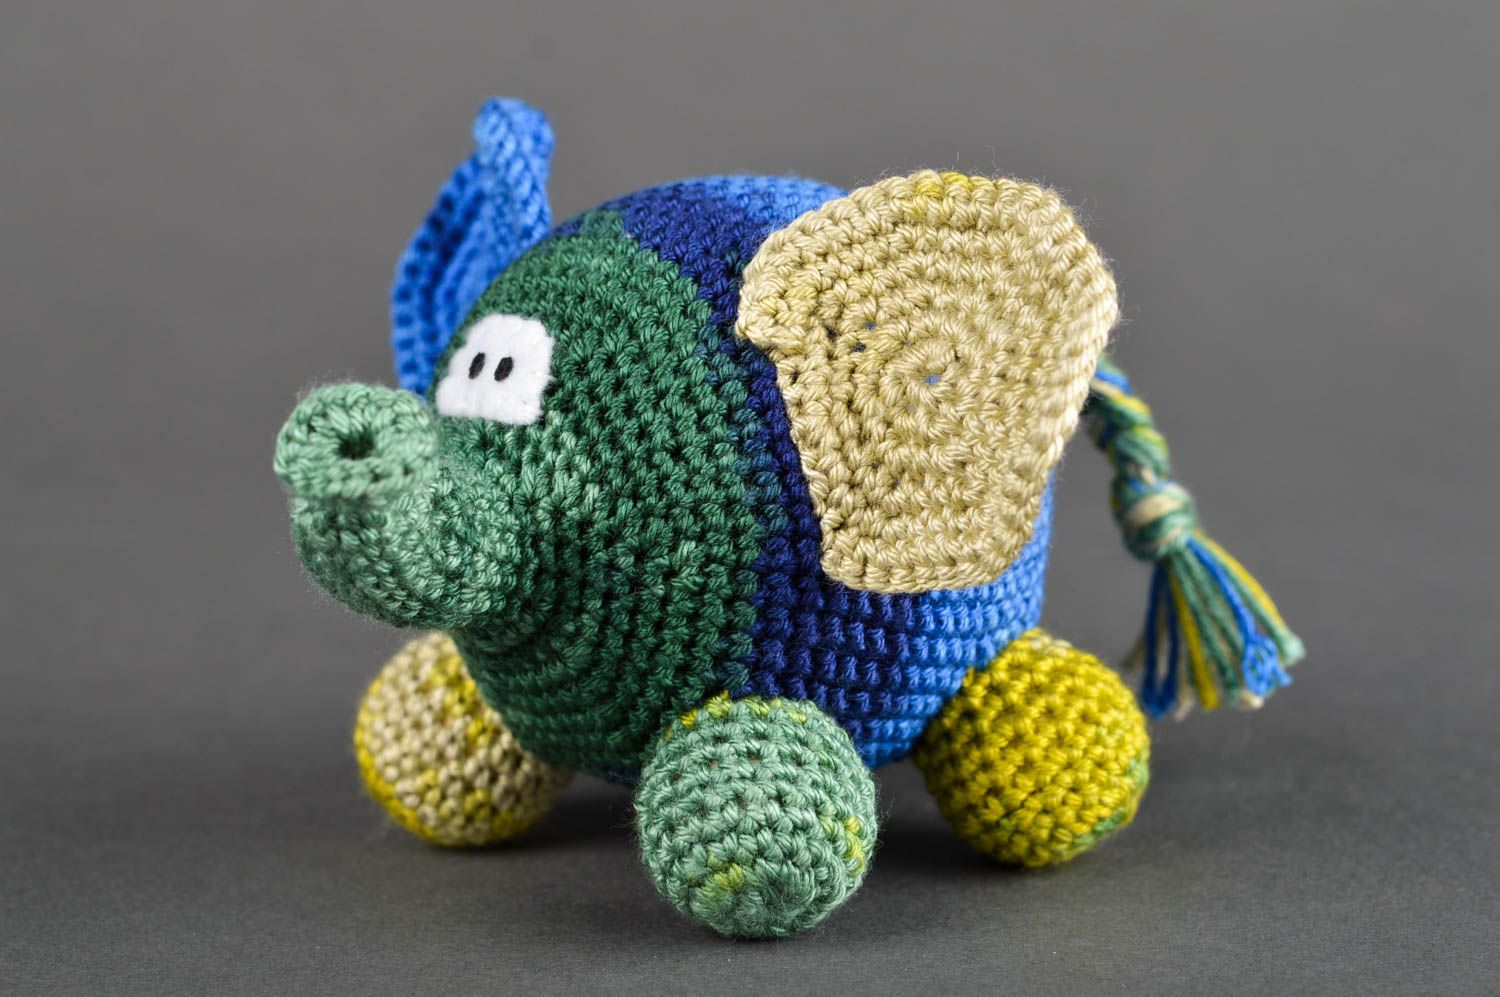 Unusual handmade crochet toy soft childrens toys interior decorating gift ideas photo 2